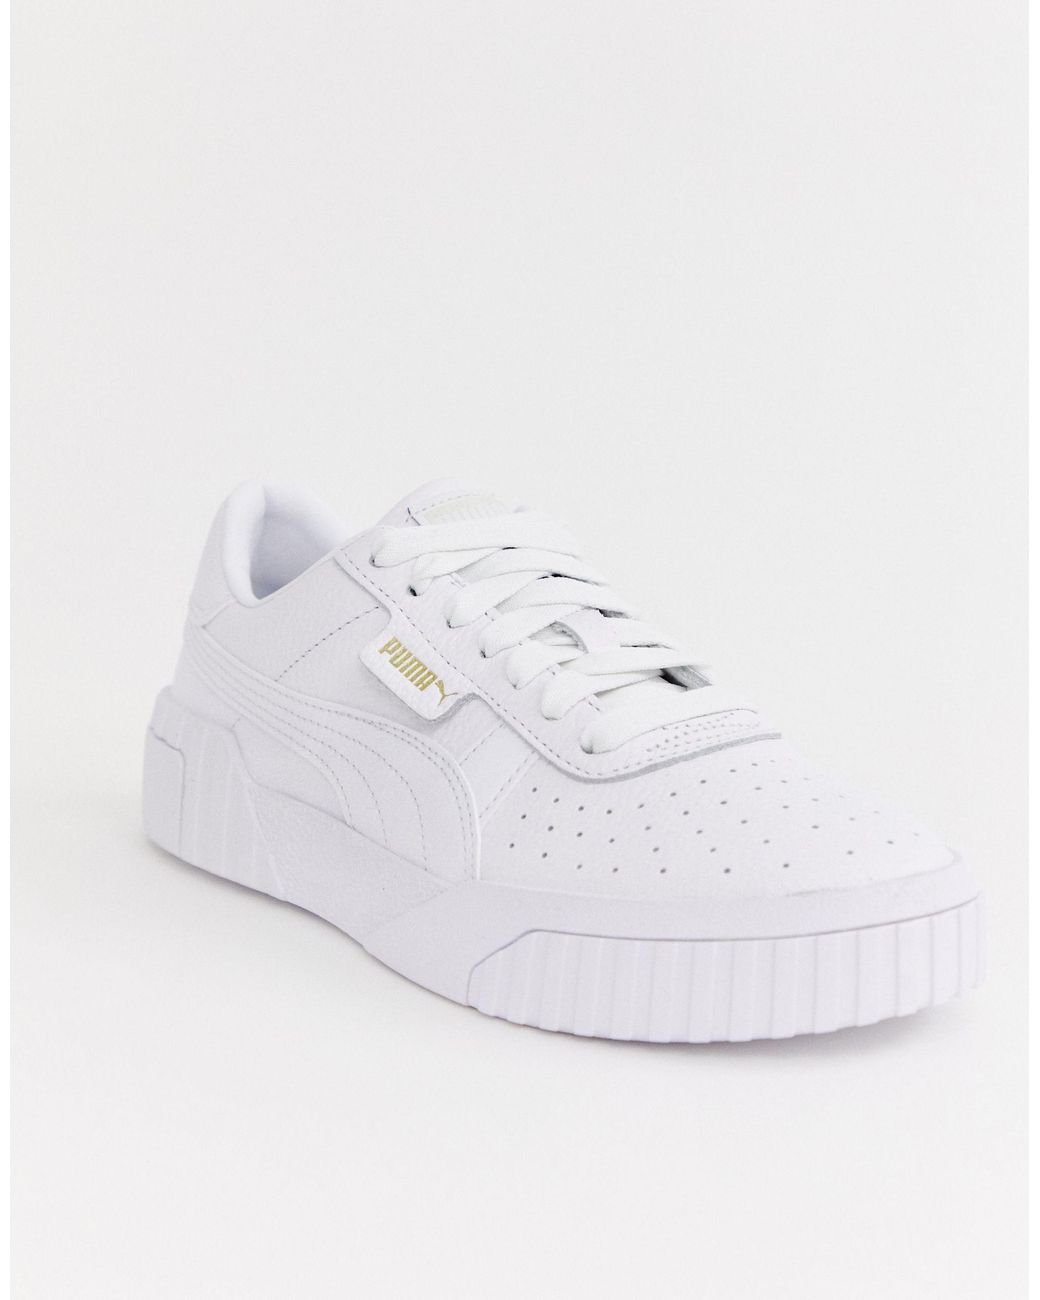 PUMA Leather Cali Sneakers in White 